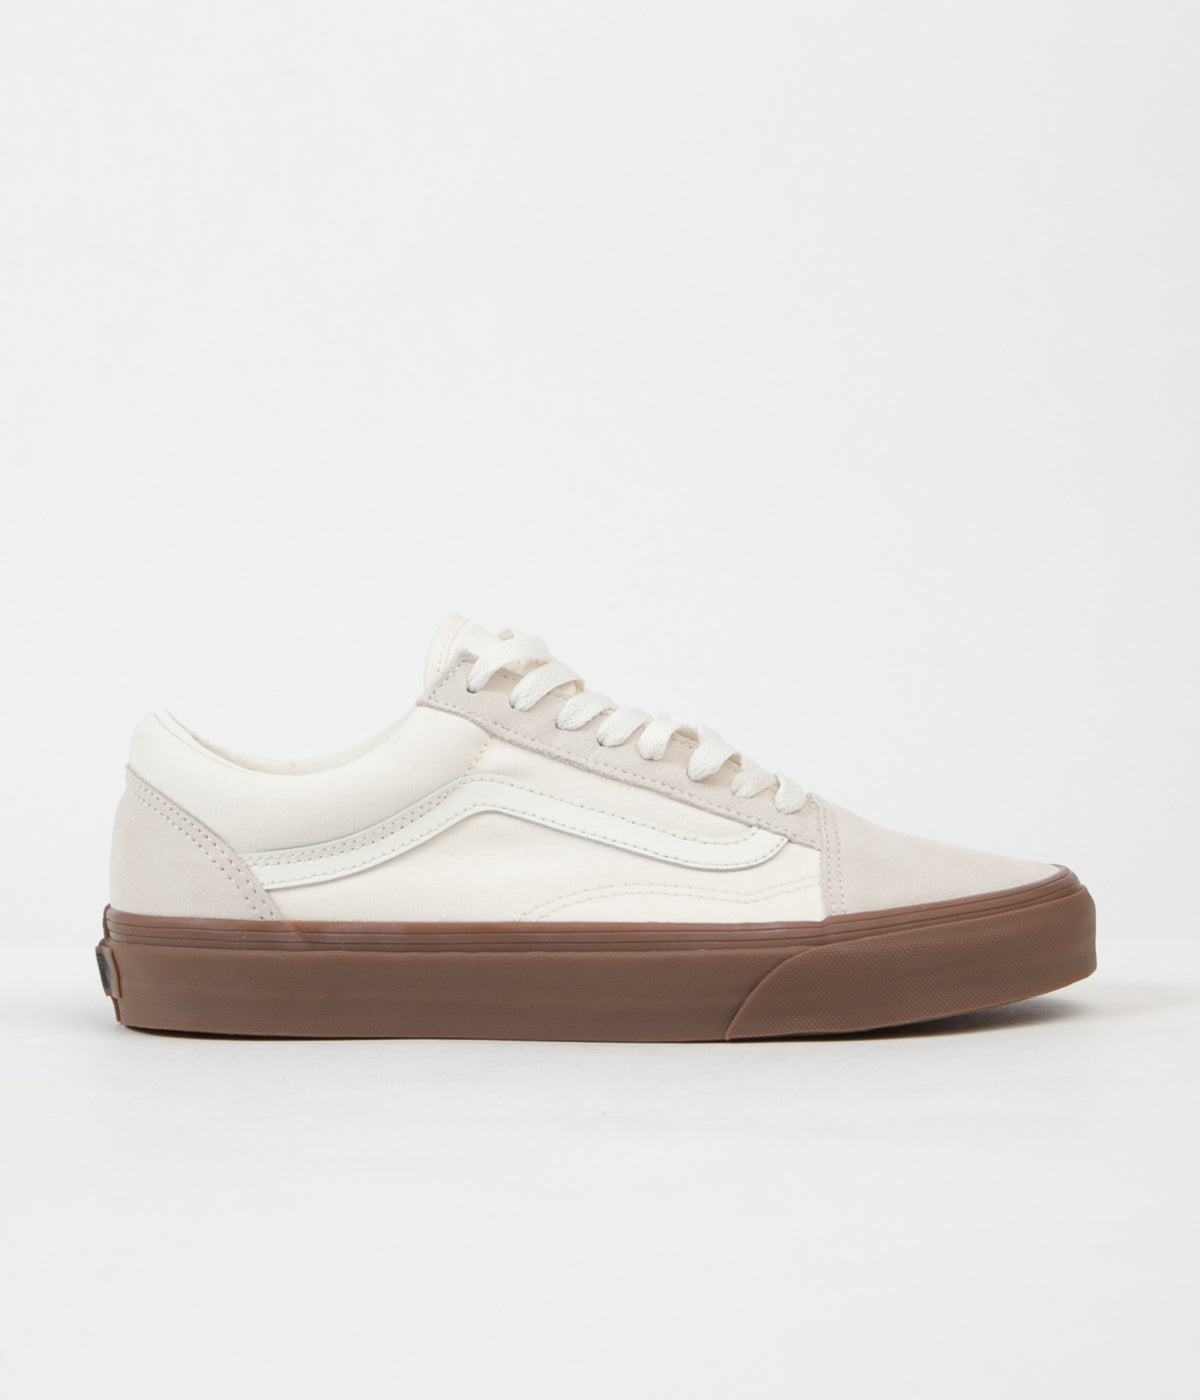 Vans Old Skool Shoes - (Suede/Canvas) White / Gum | Flatspot